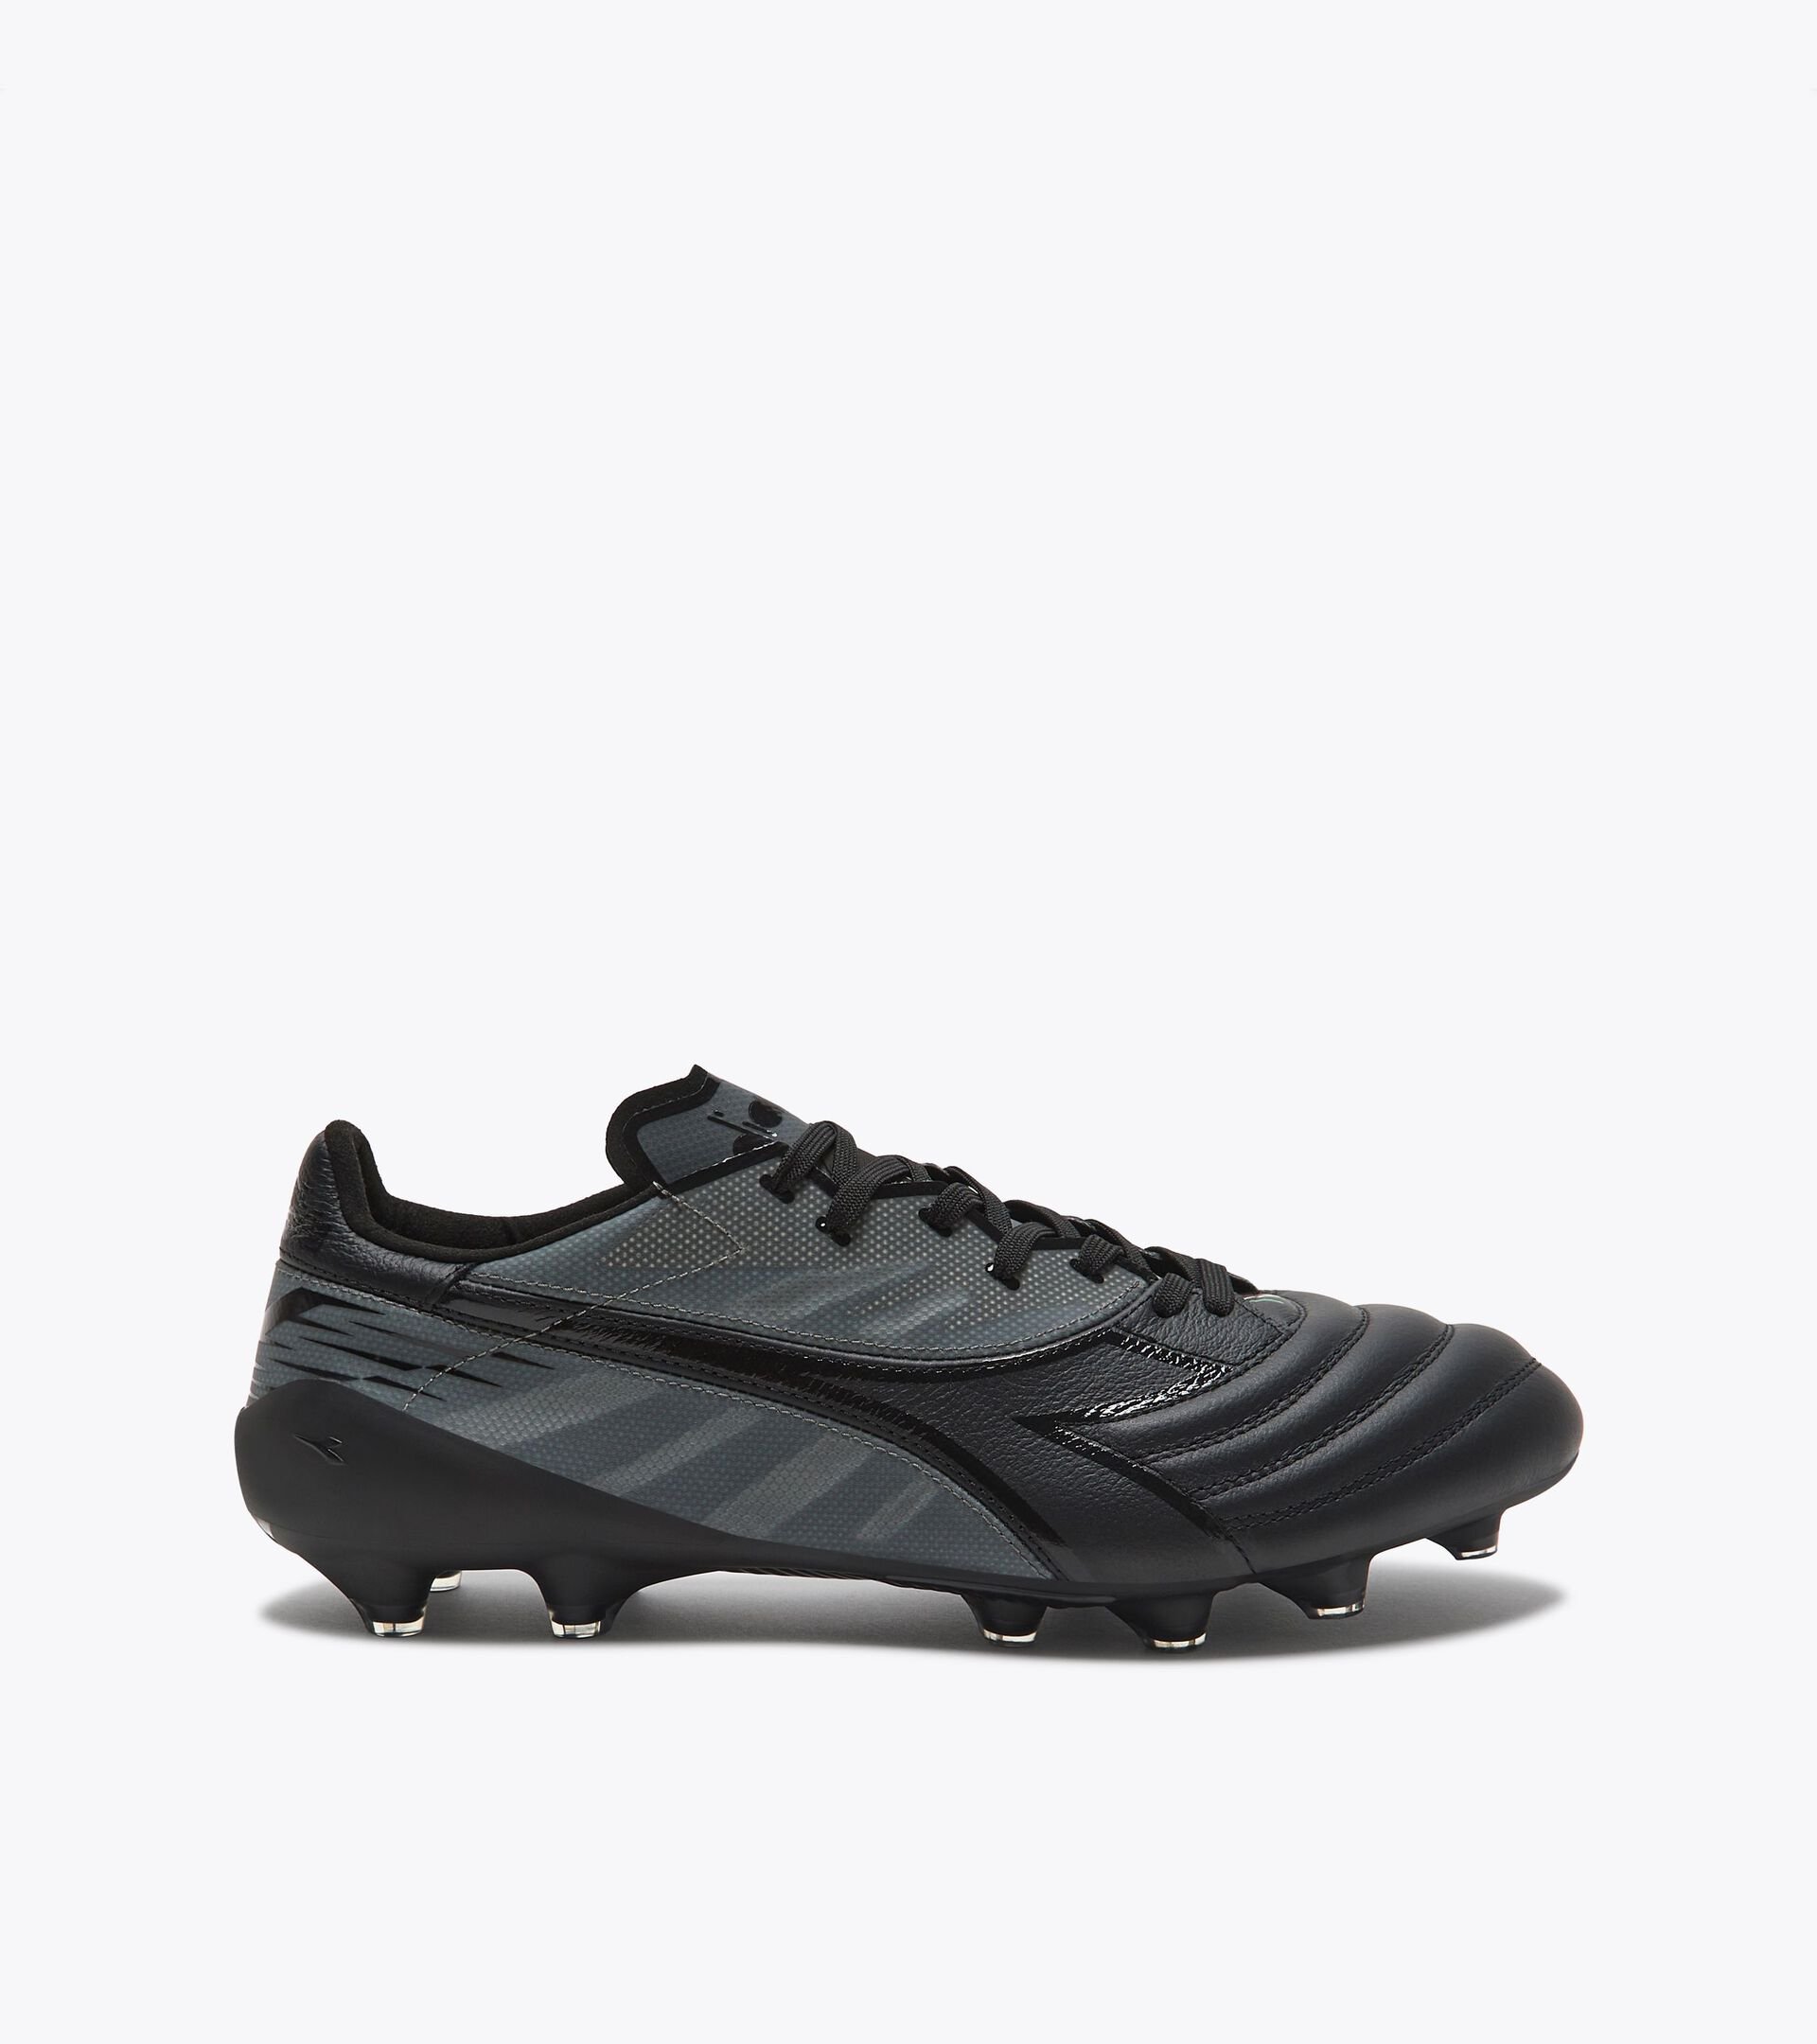 Firm ground football boots - Made in Italy BRASIL ELITE VELOCE ITA LPX BLACK - Diadora